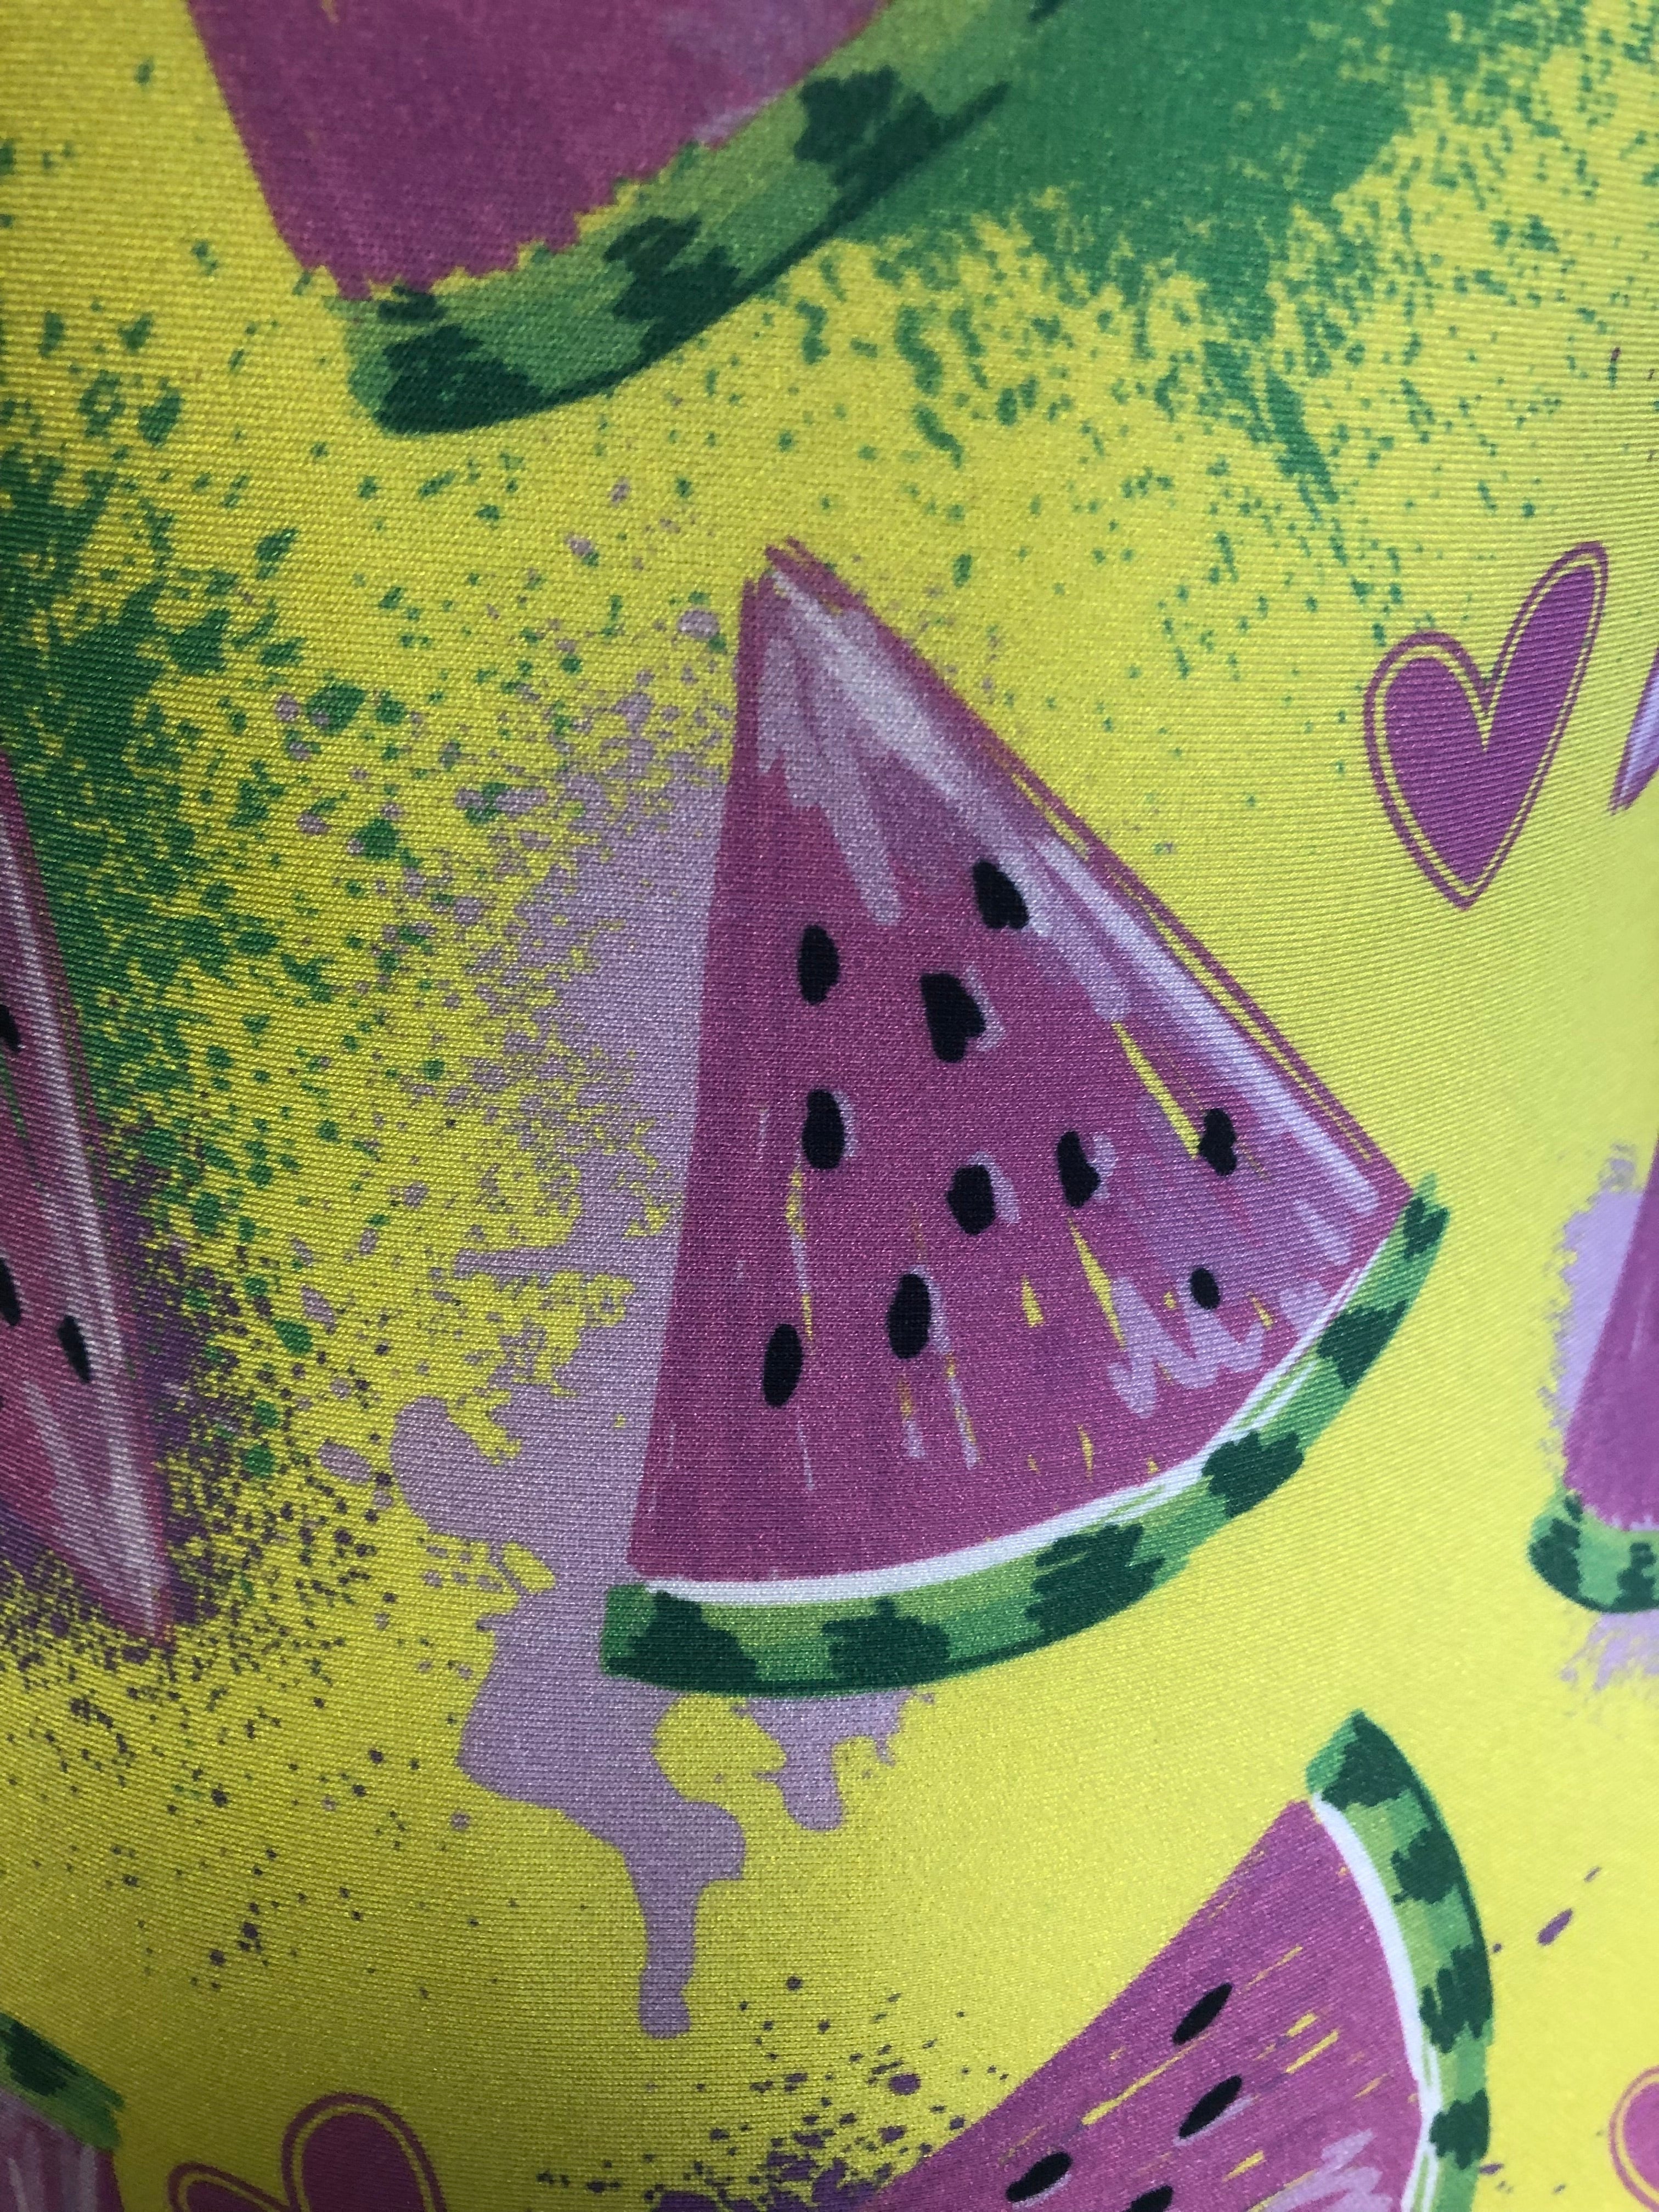 Watermelon print